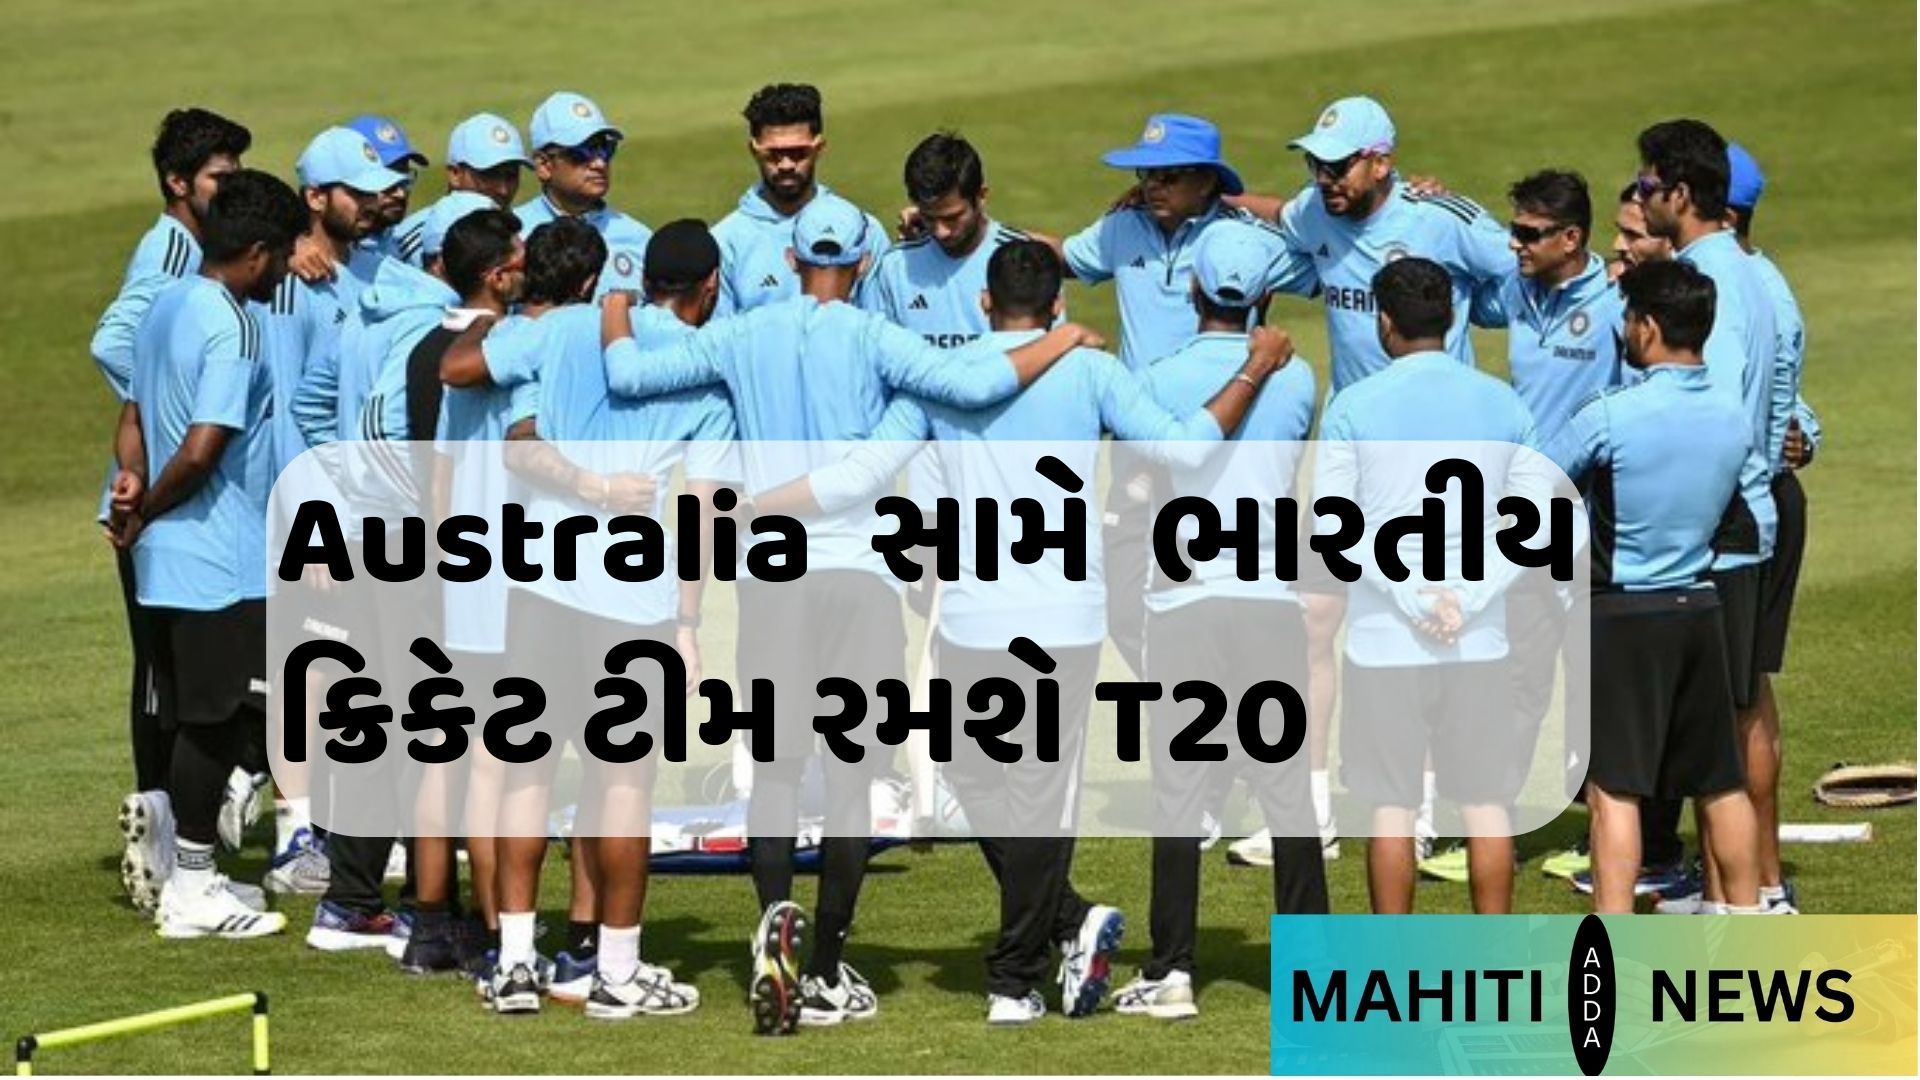 T20/Australia vs Indian